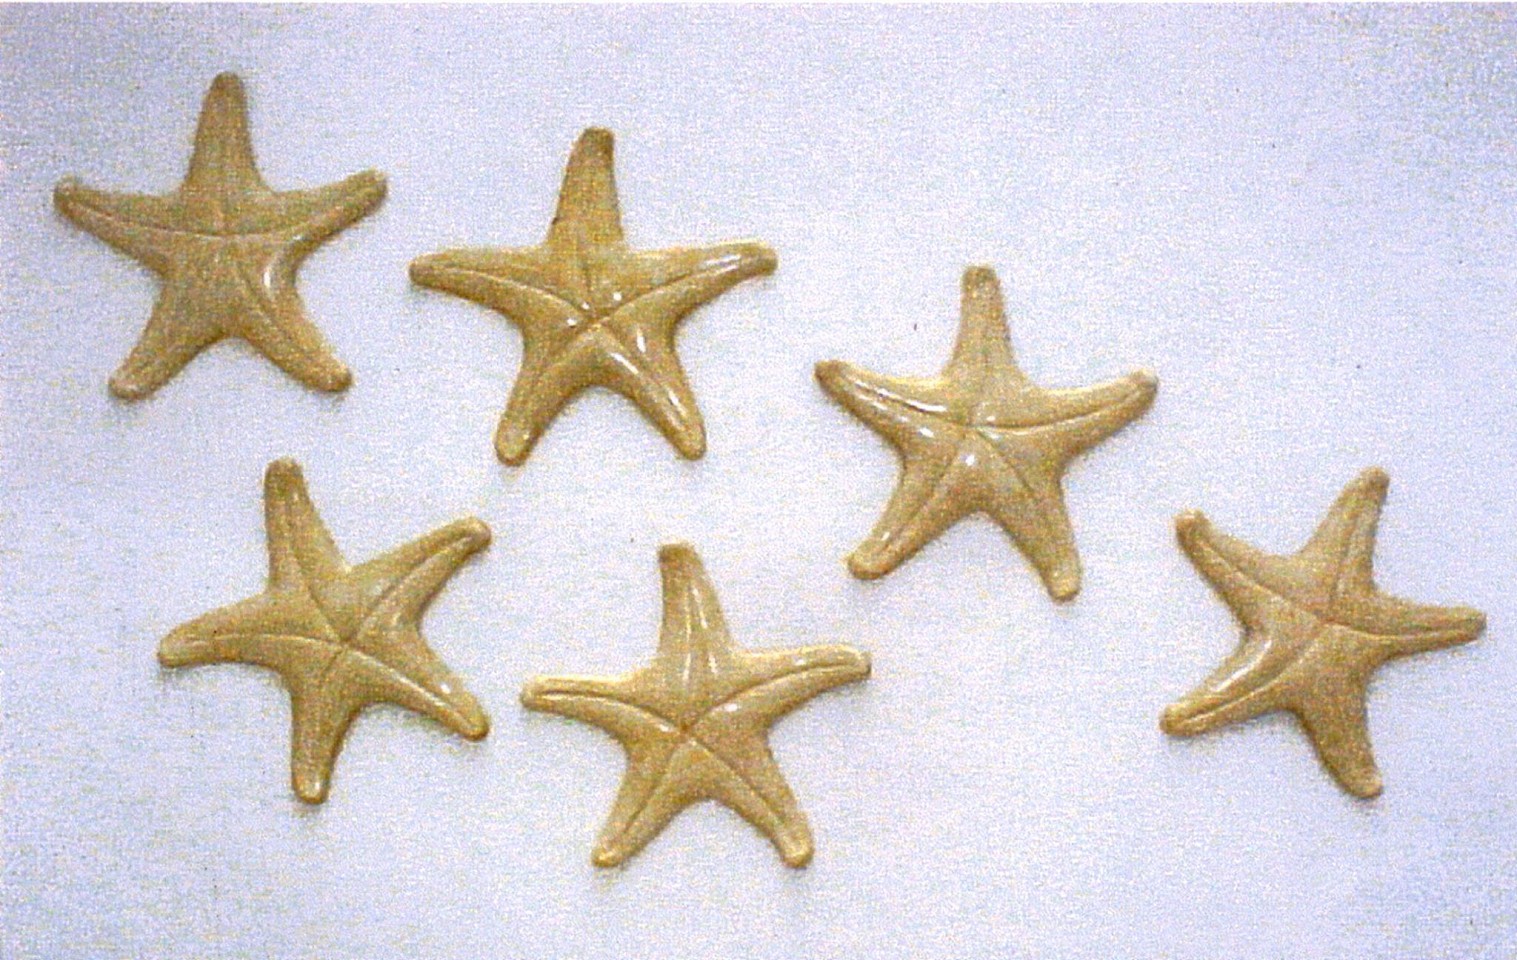 XAWERY WOLSKI, Estrellas de Mar (4), 2000
terracota, 31 7/8 x 31 7/8 x 2 in. (81 x 81 x 5 cm)
Polyptich 4
Sizes & price each
WX-O-0137